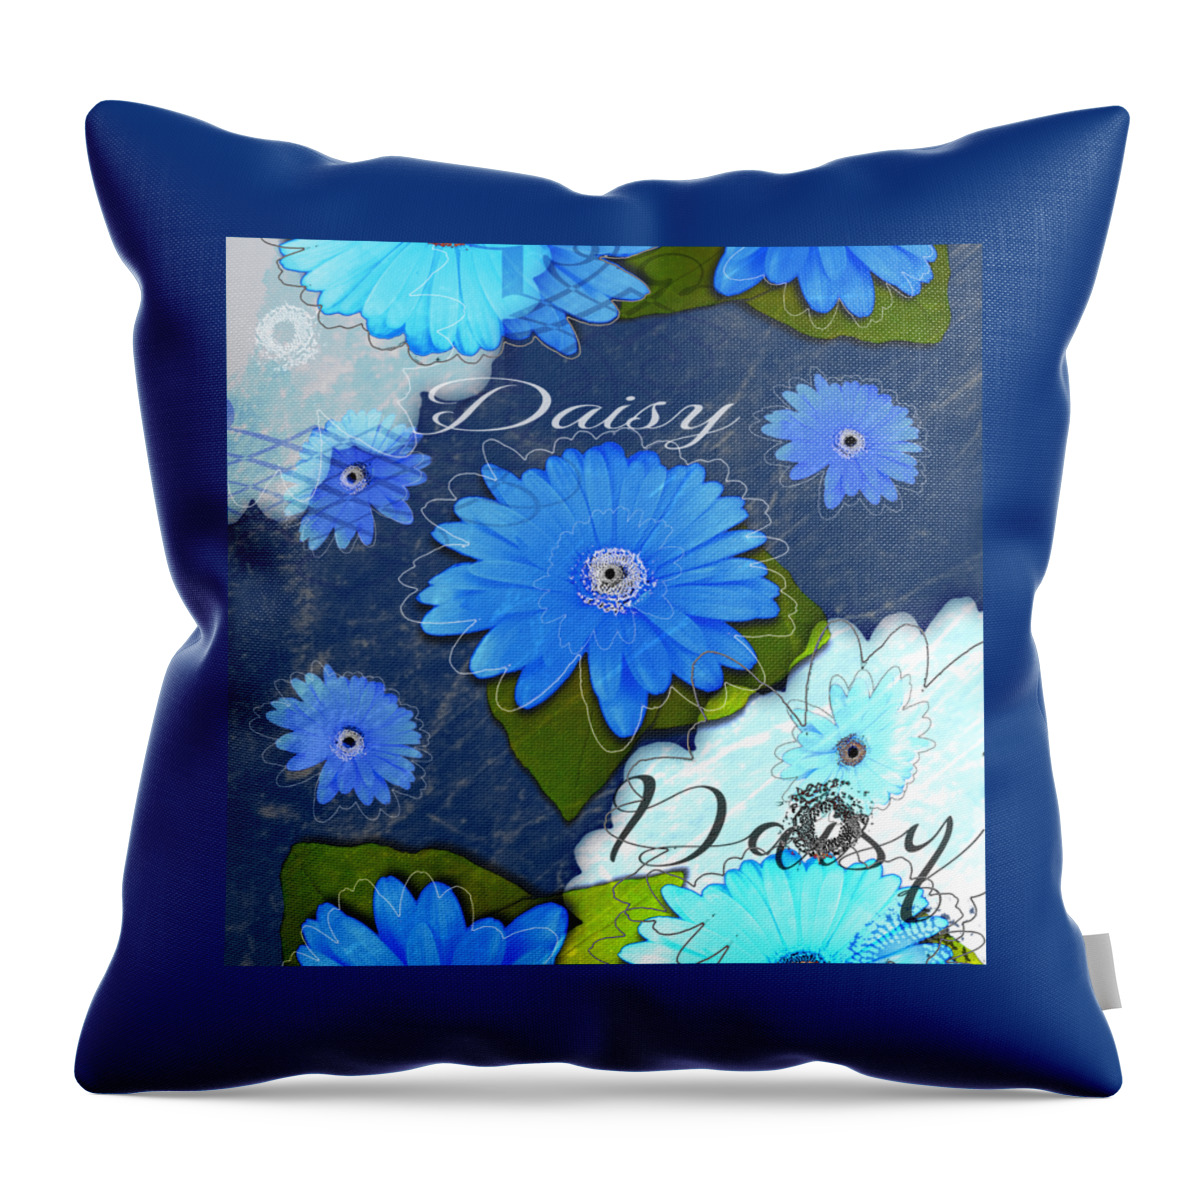 Daisy Cup Throw Pillow featuring the digital art Daisy Cup Memorial Day Memorabilia Design by Delynn Addams